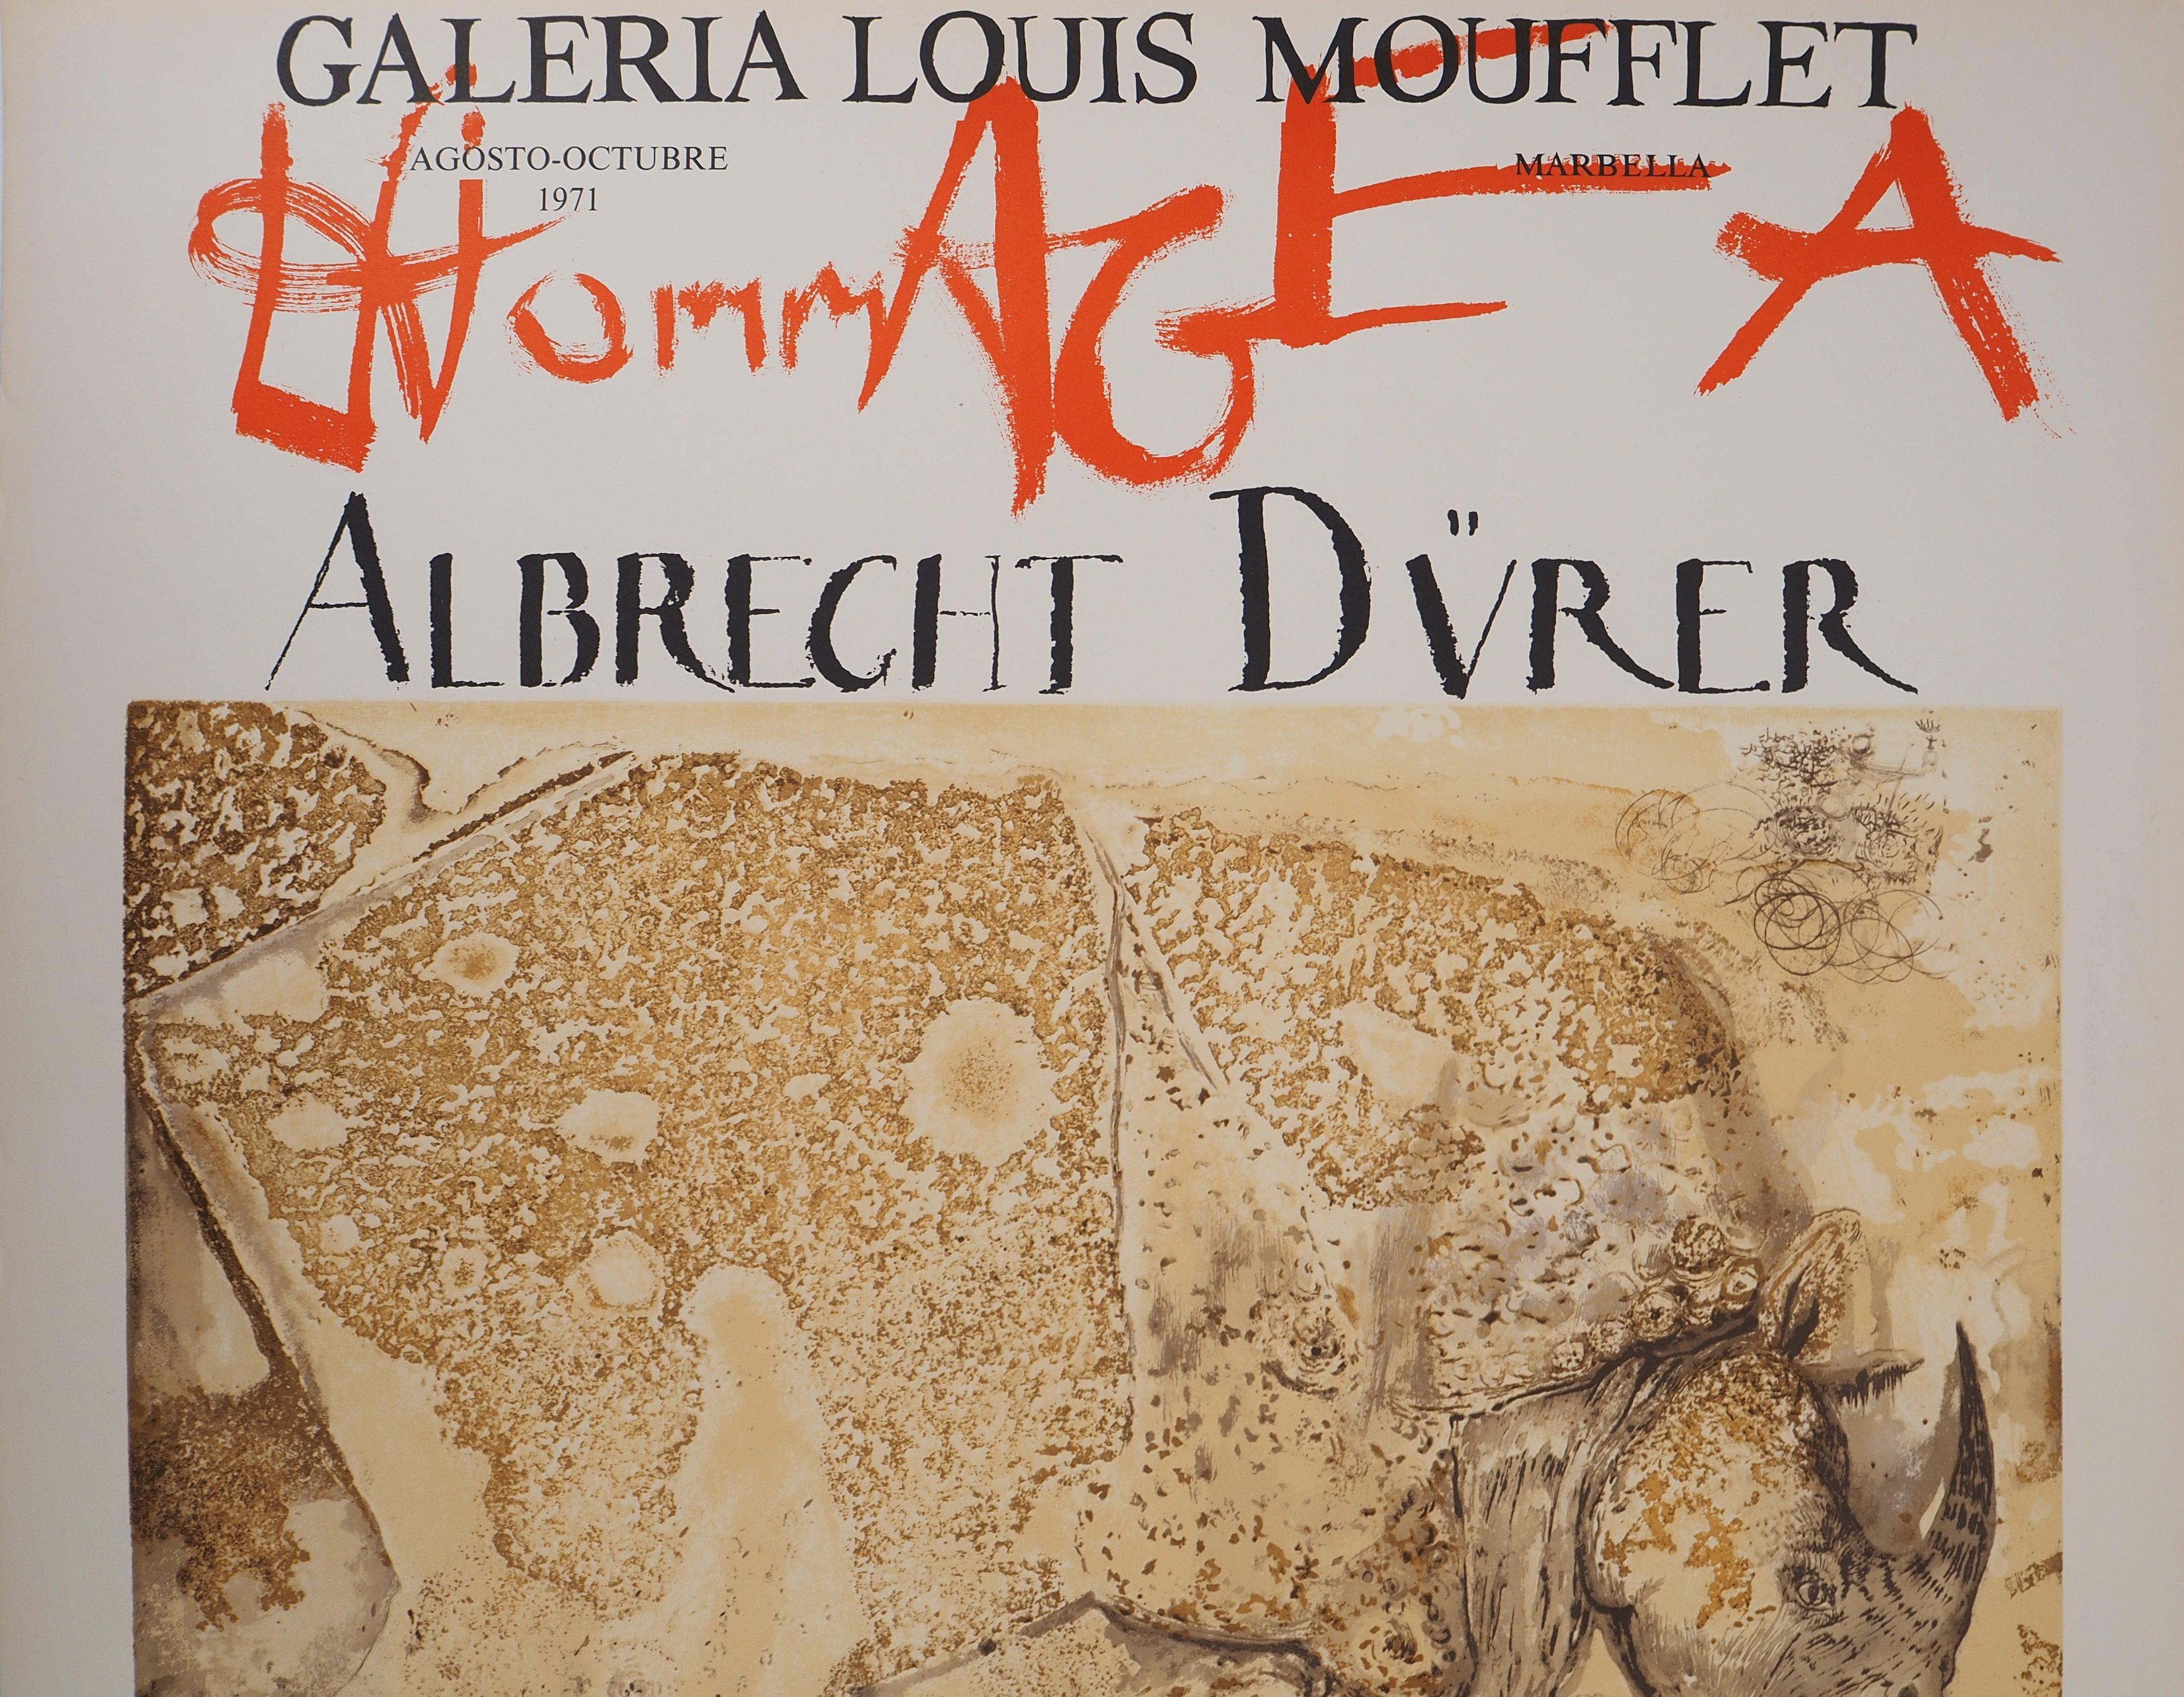 Rhinoceros, Tribute to Albrecht DURER - Original lithograph poster (Gaspar #1503 - Surrealist Print by Salvador Dalí